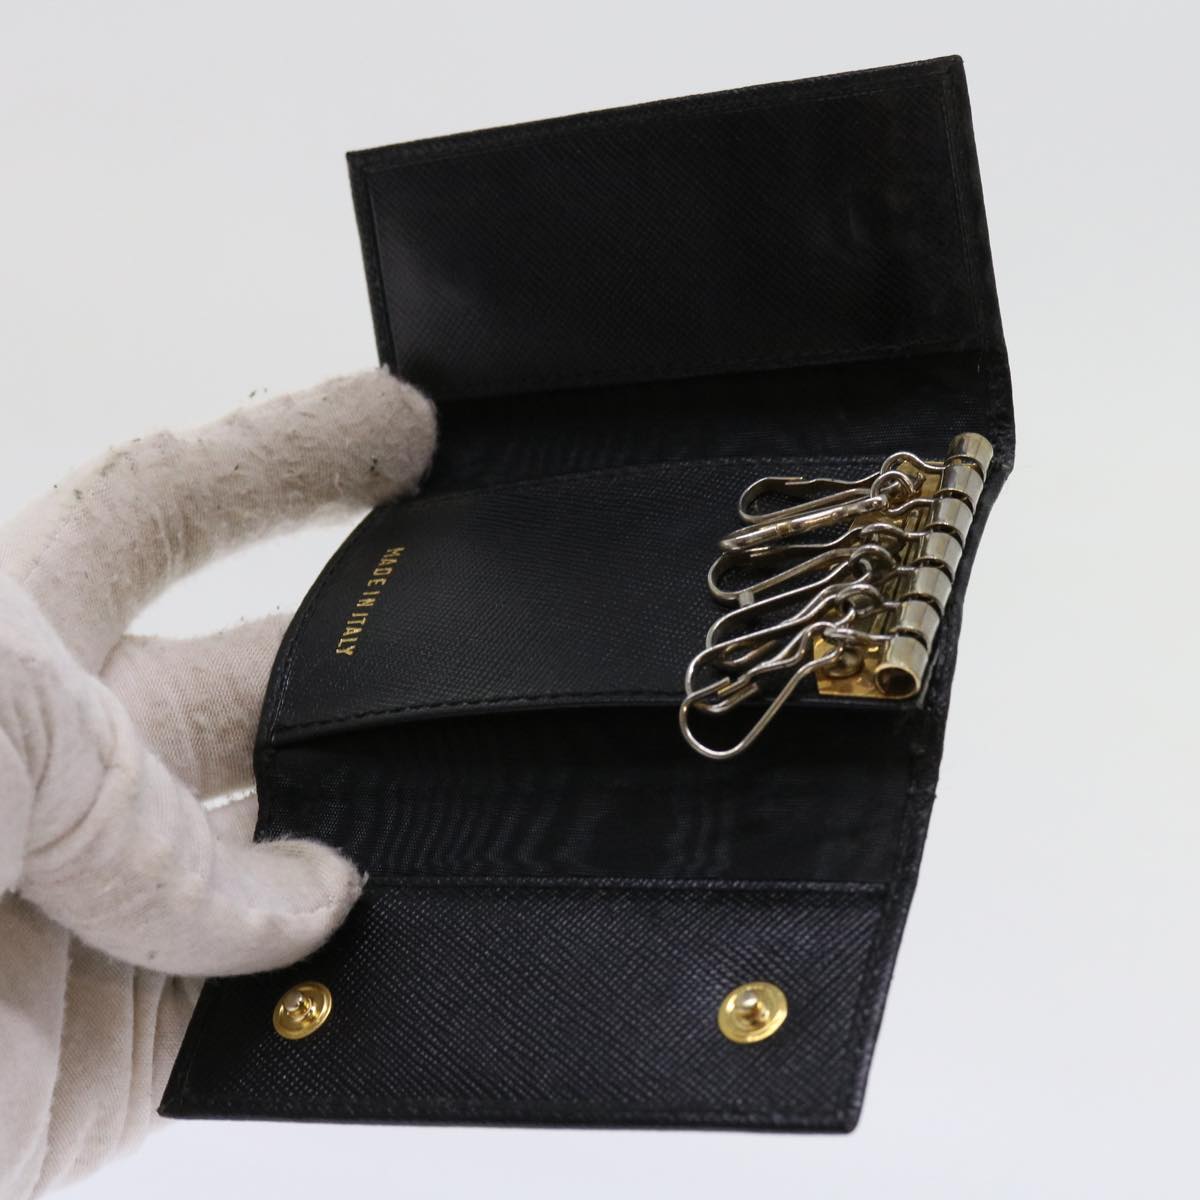 PRADA Card Case Key Case Leather 2Set Black Auth bs10887